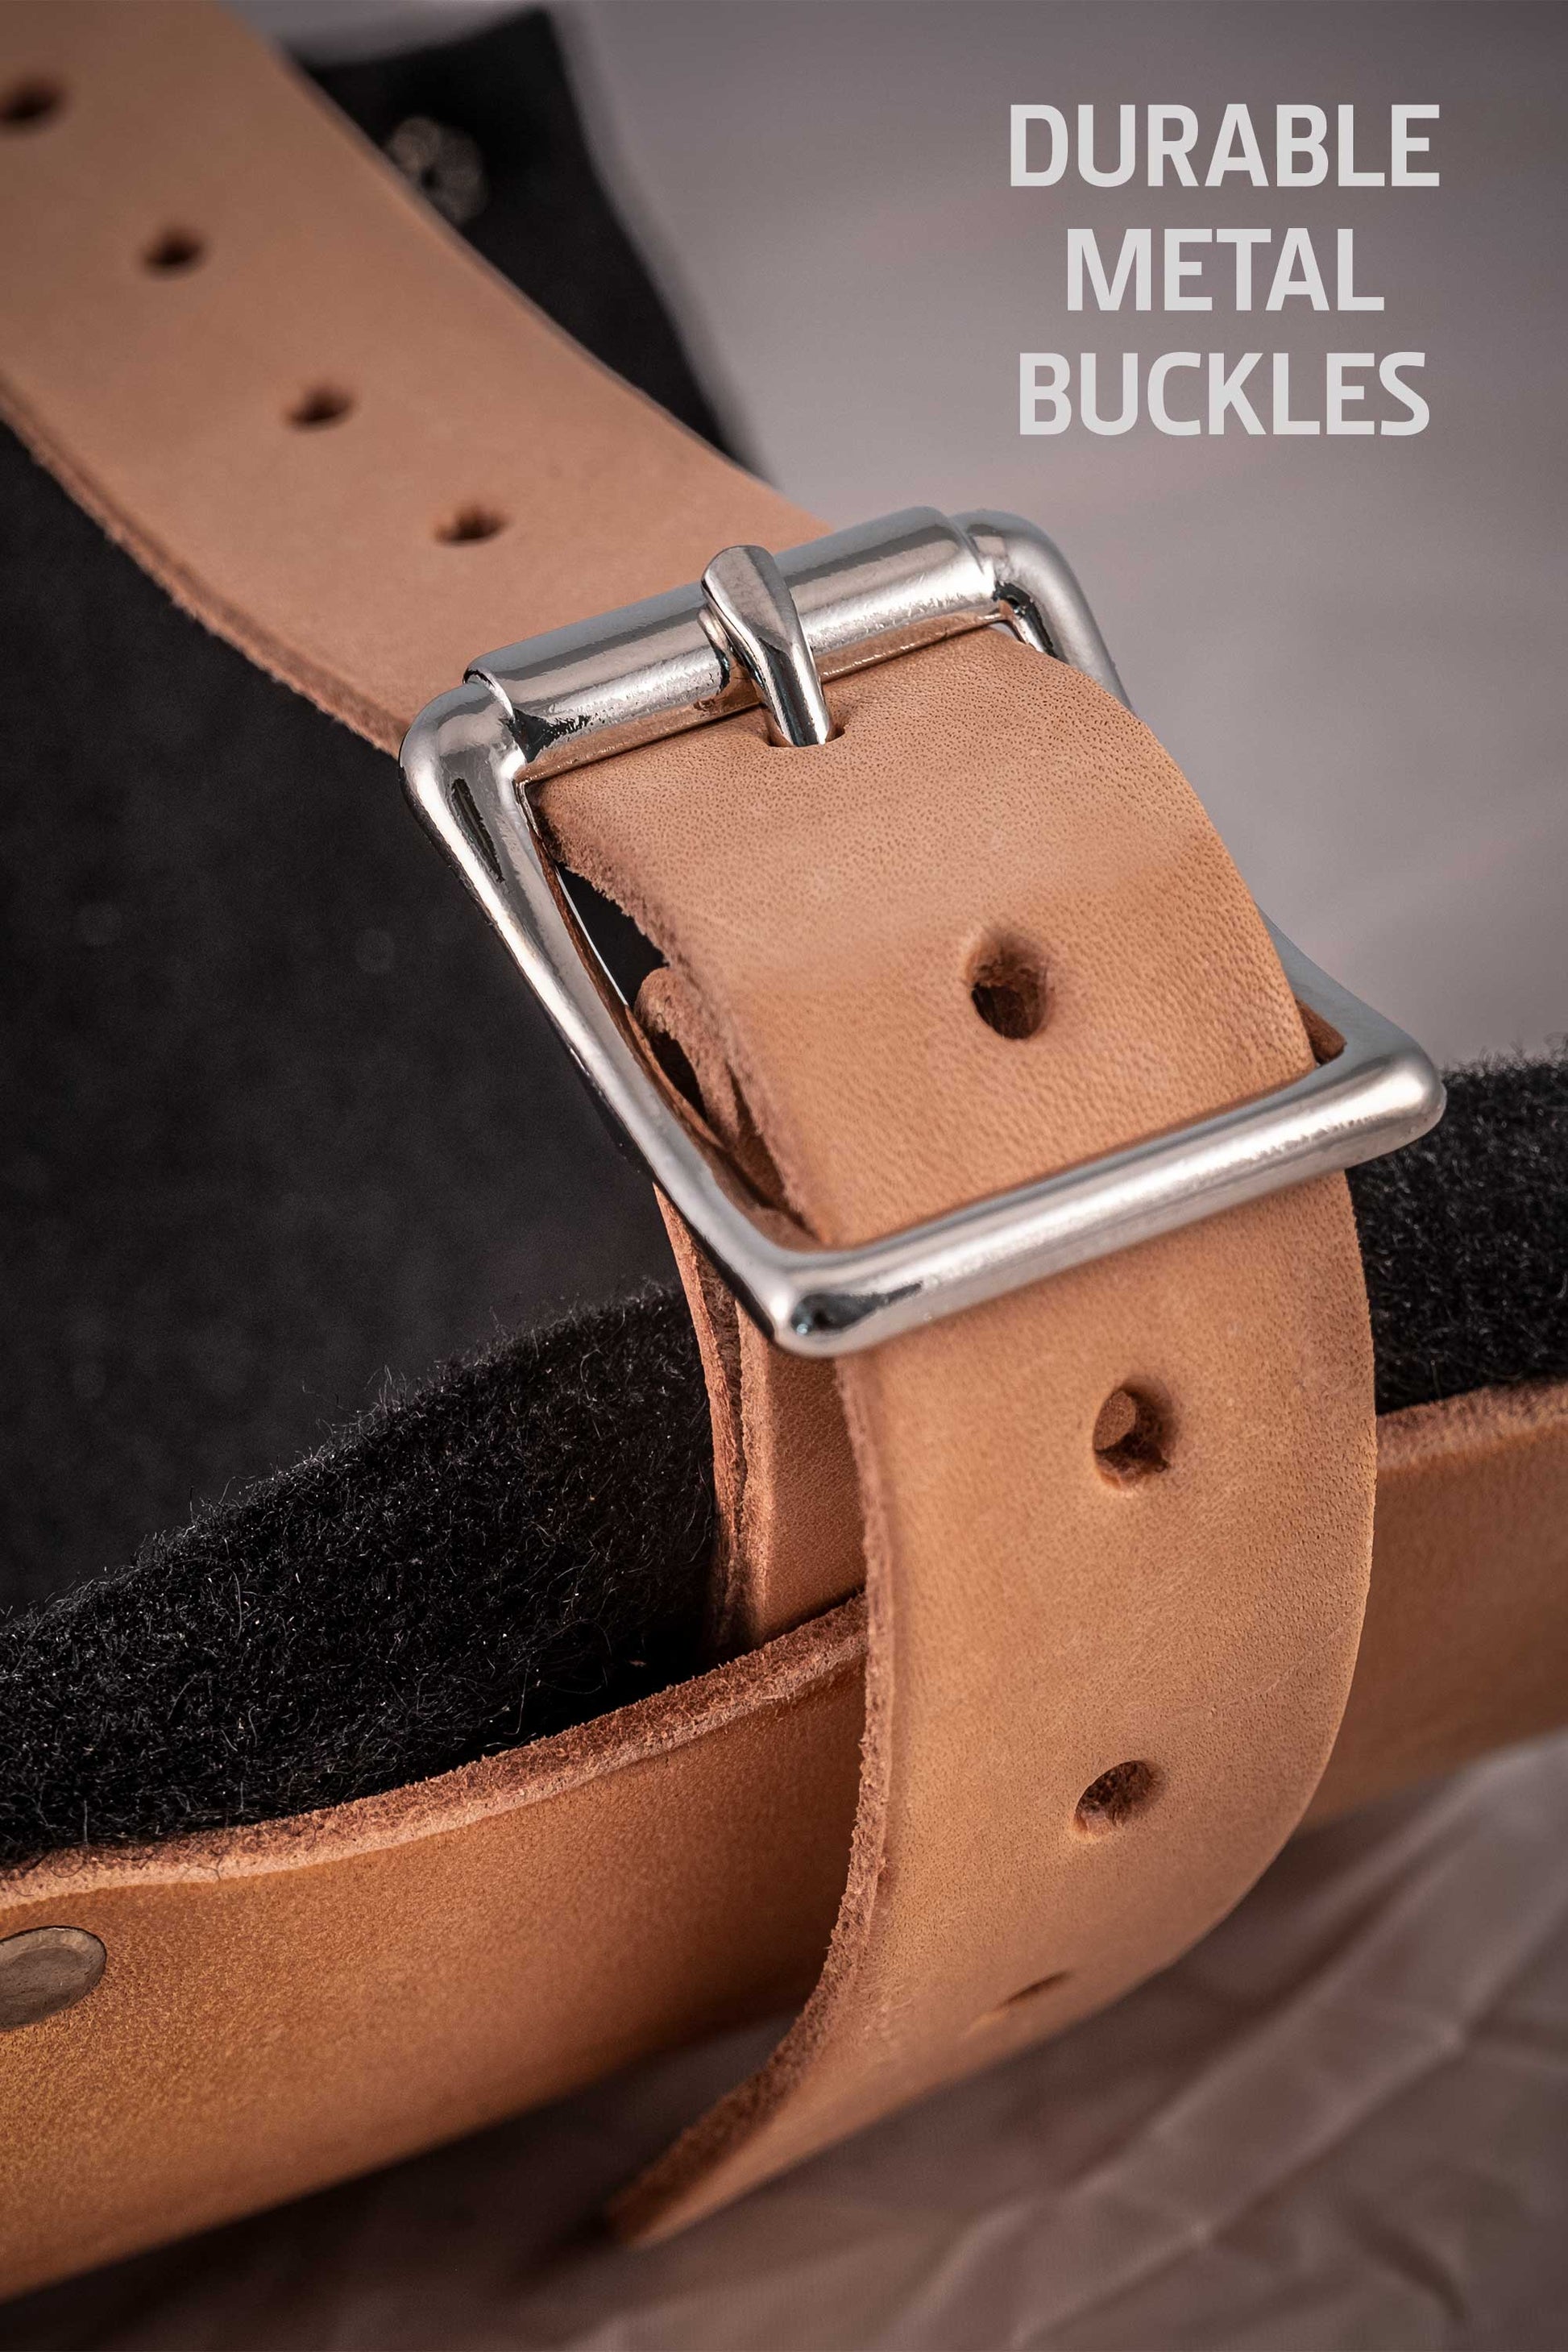 ALTA Leather Knee Pad with single adjustable strap